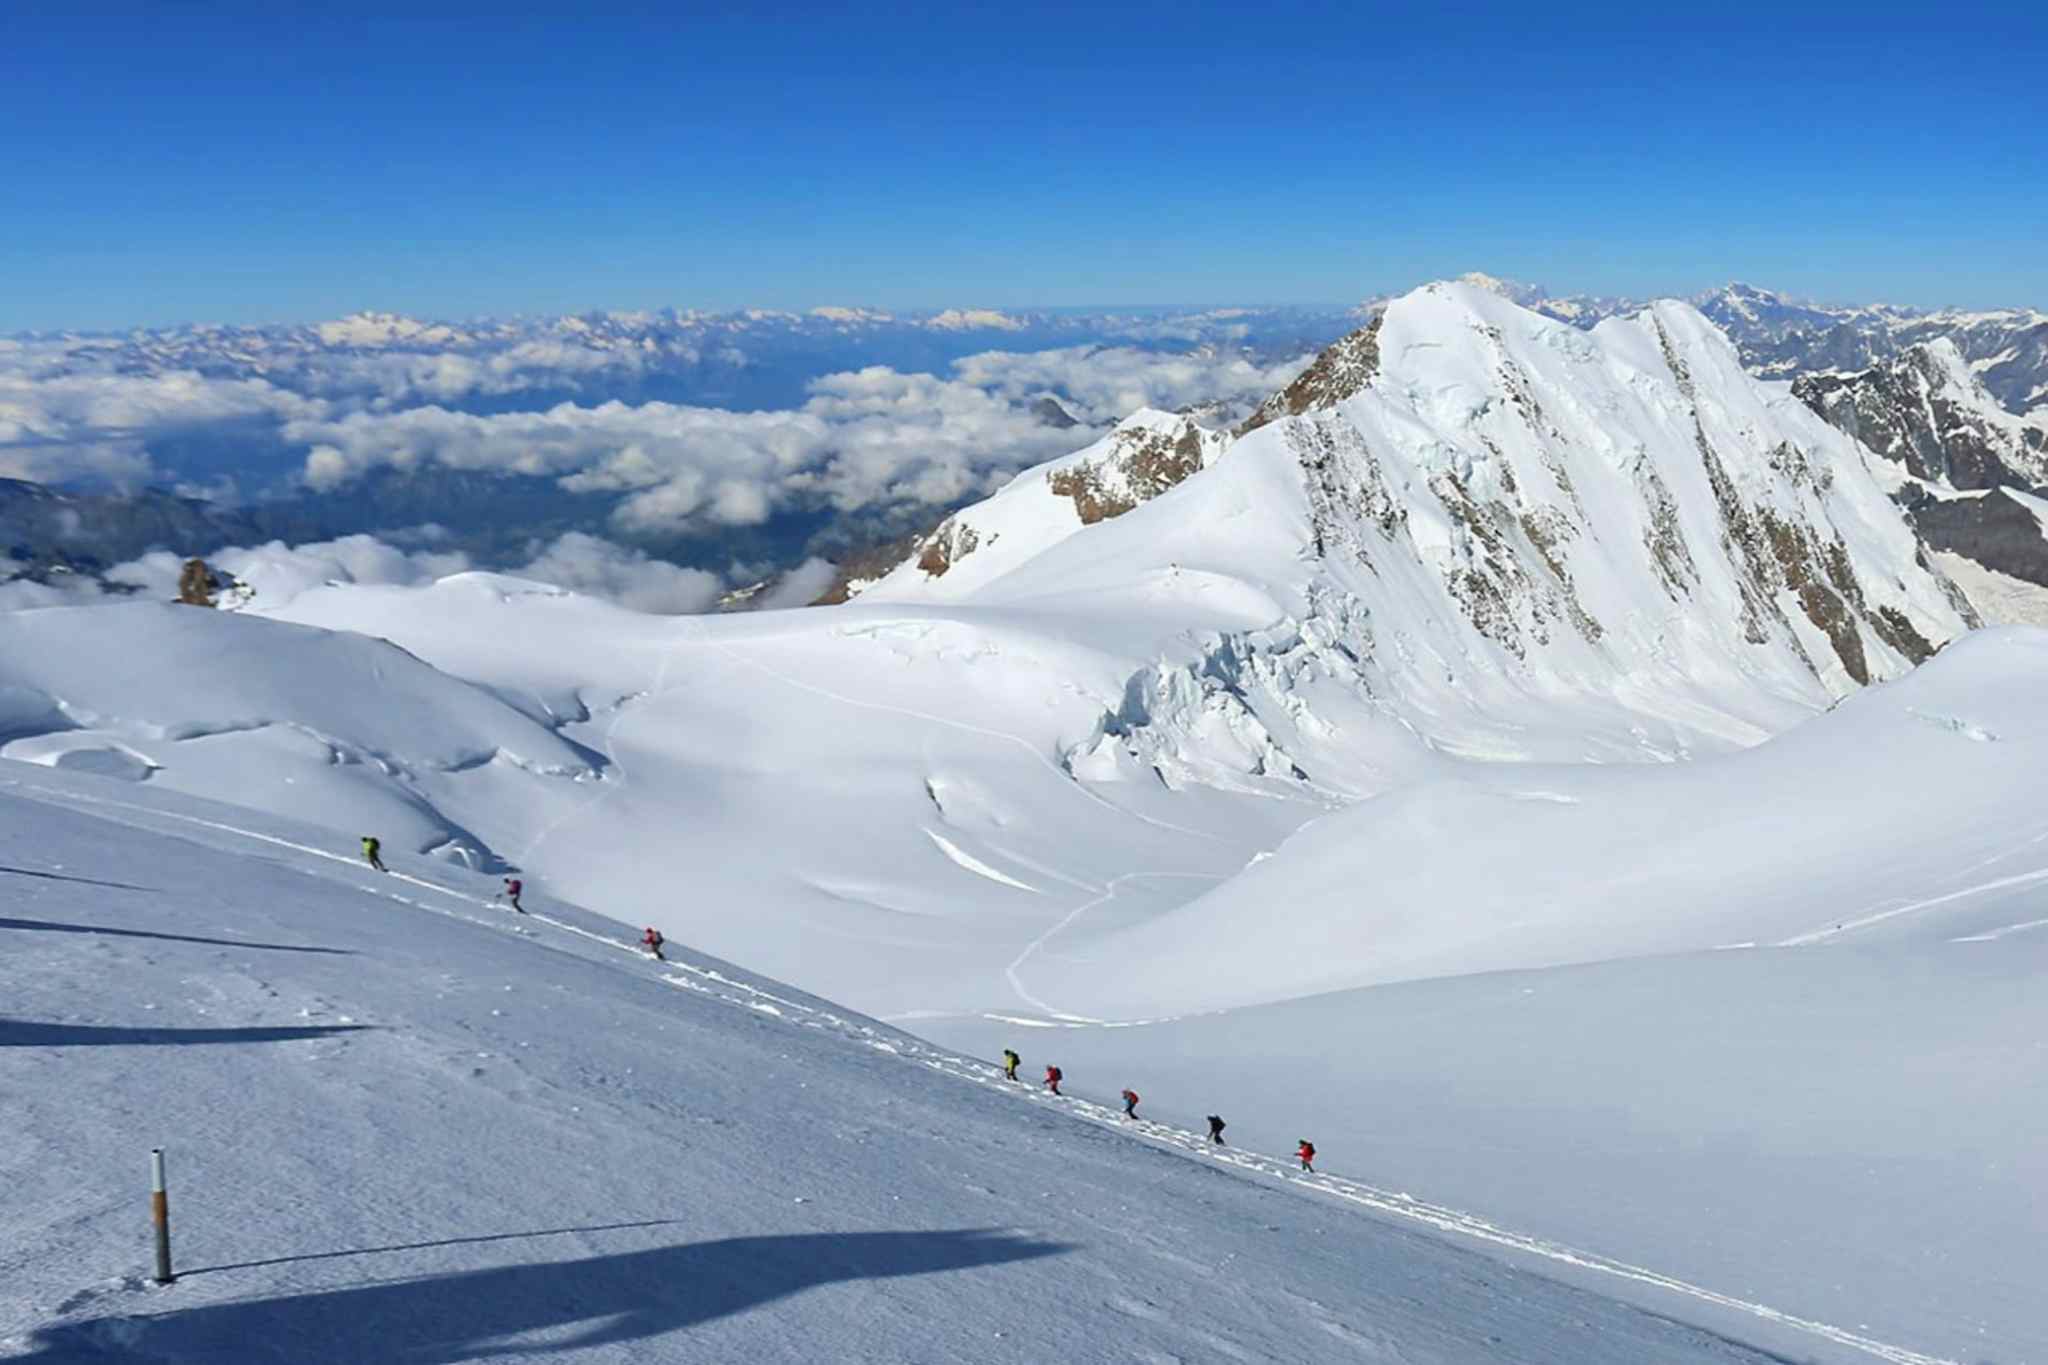 Monte Rosa climb, Italian Alps
Host Image: Altai 